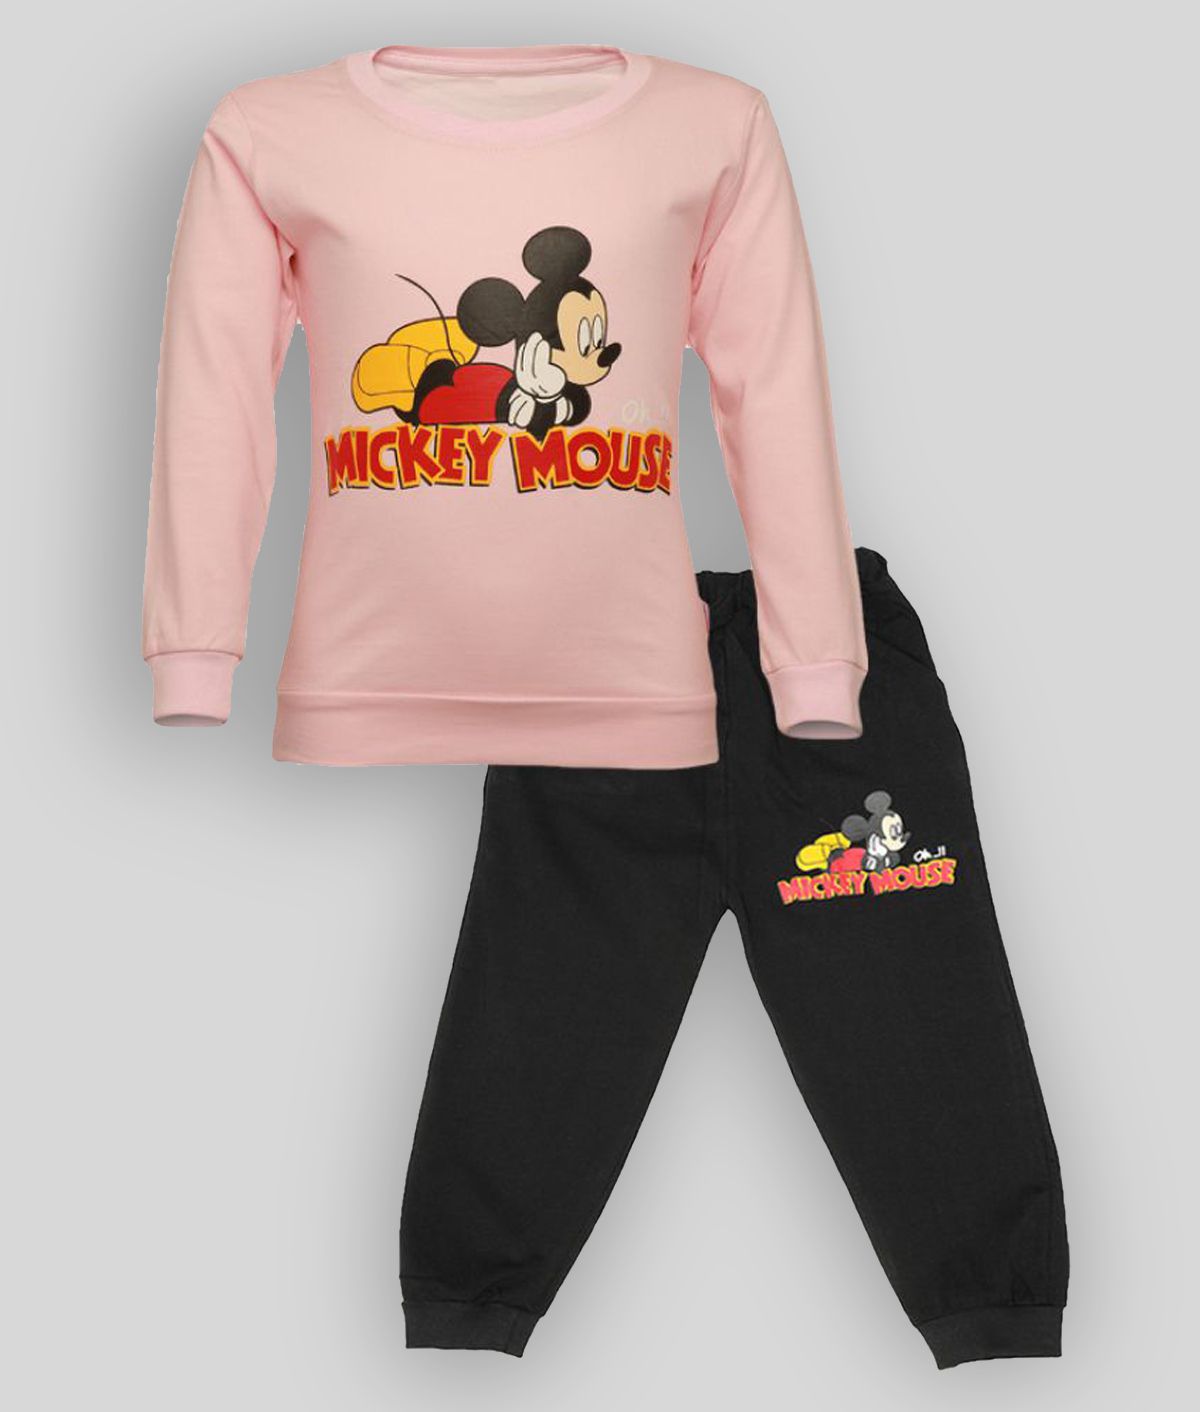     			CATCUB Kids Cotton Mickey Mouse Printed Clothing Set (Pink)